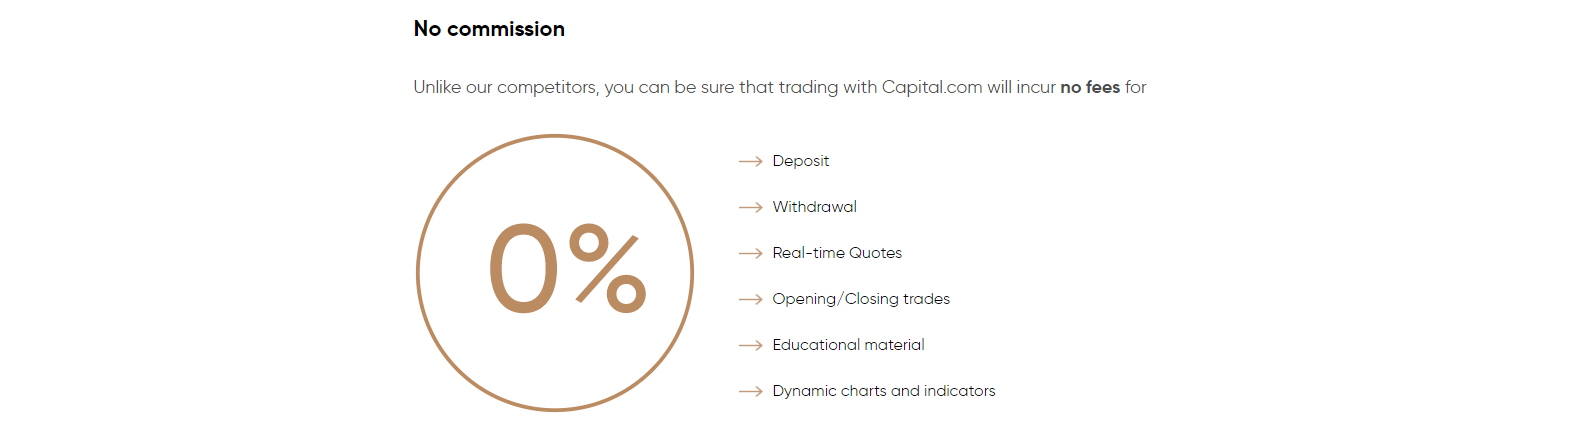 Capital.com Review pricing environment